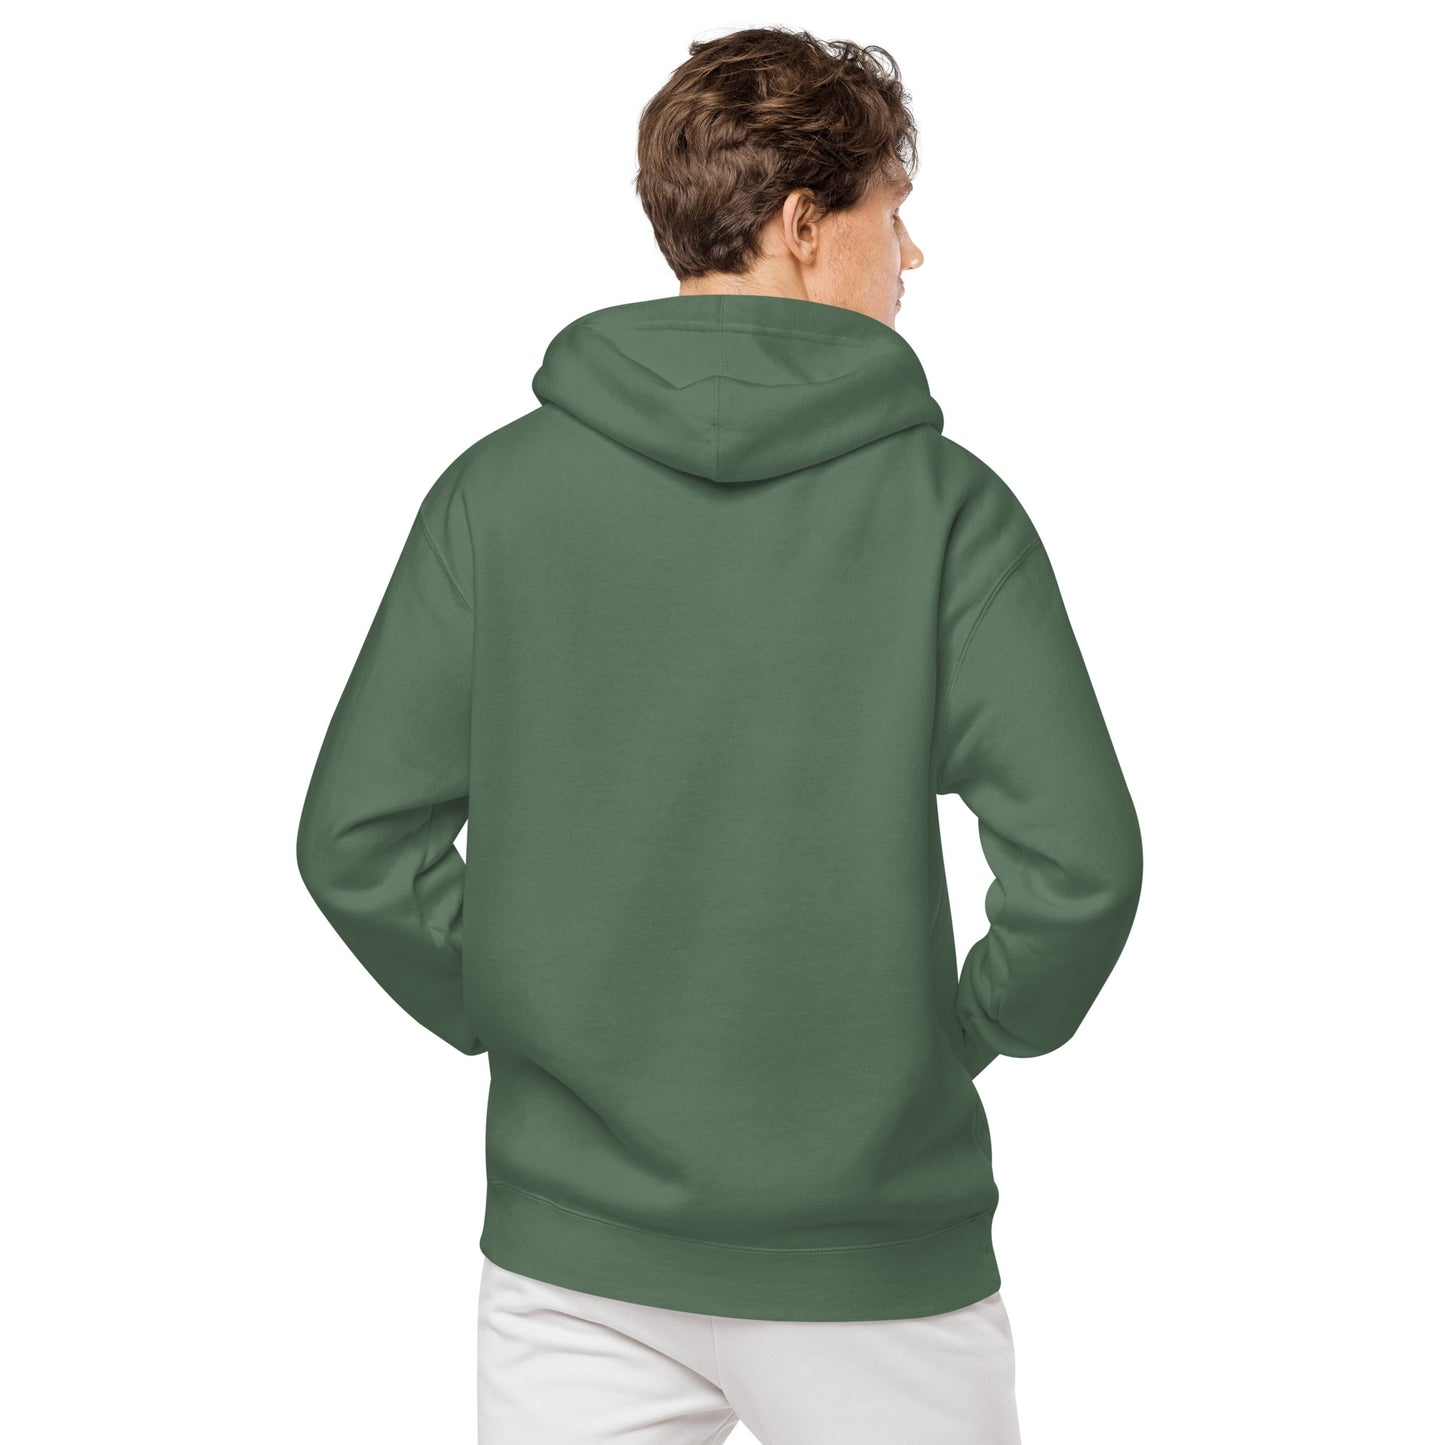 Heavyweight Pigment-dyed Alpine Green hoodie